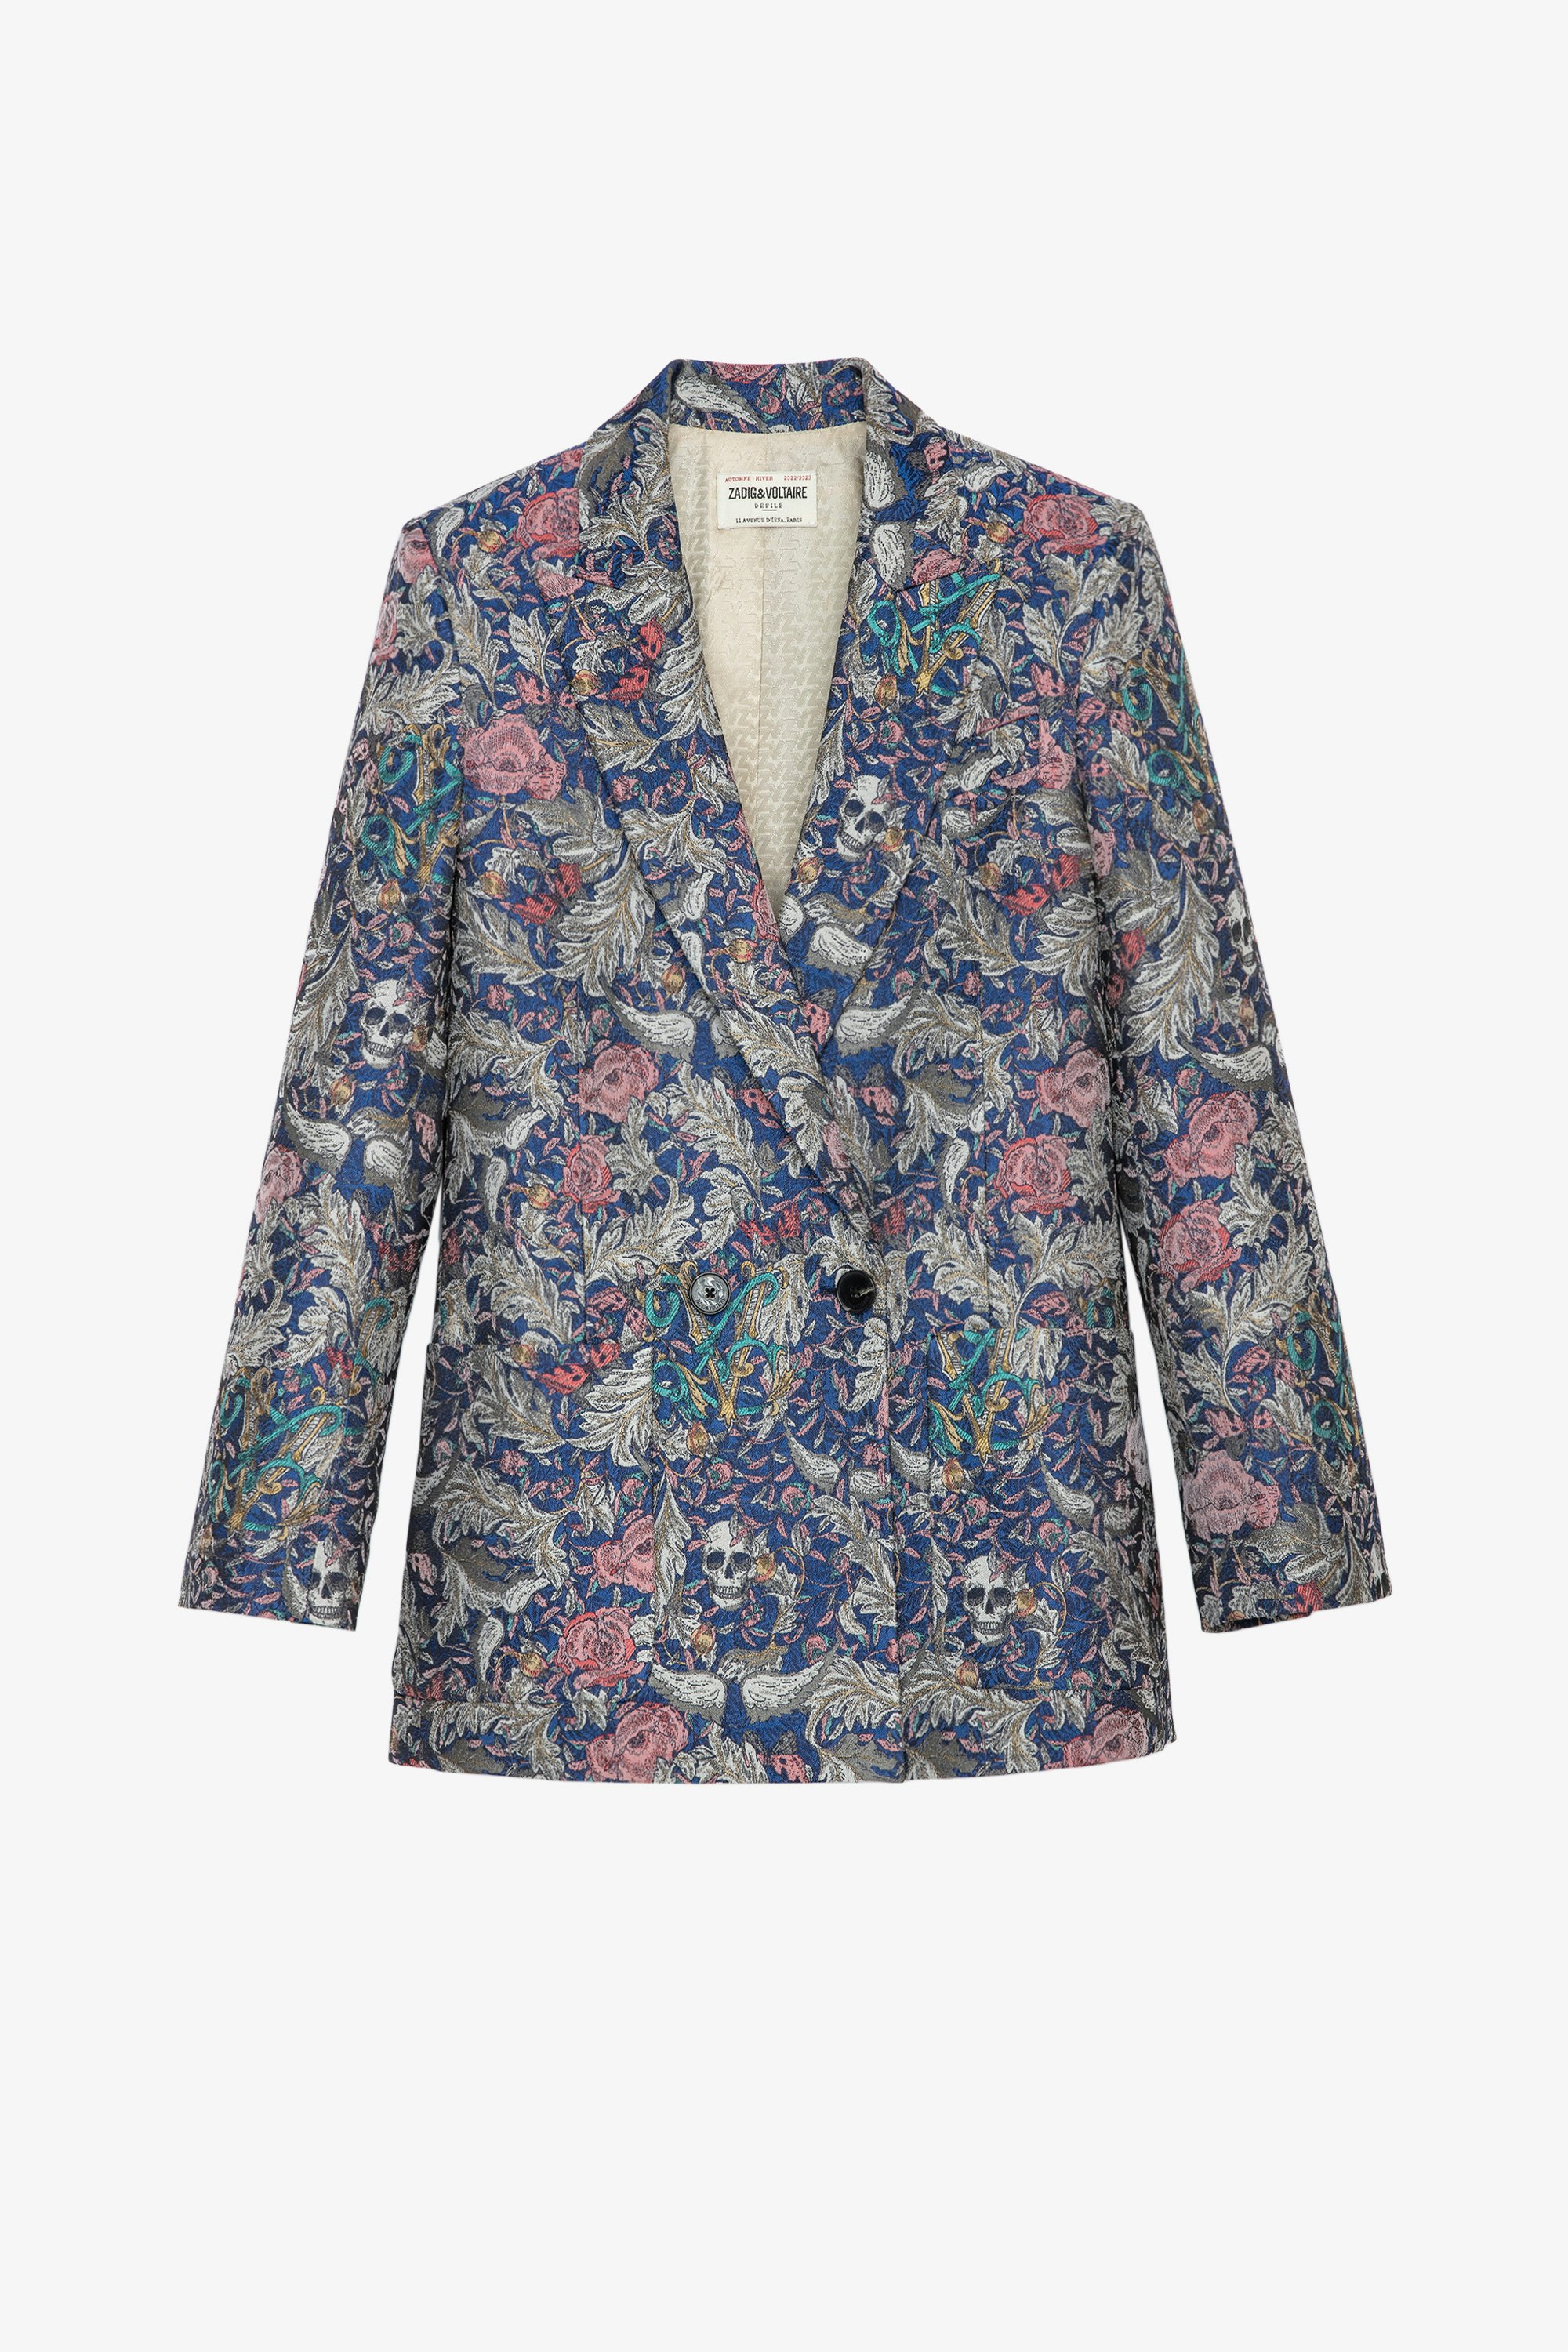 Visko Jac Jacket Women's blue jacquard jacket with floral motifs 